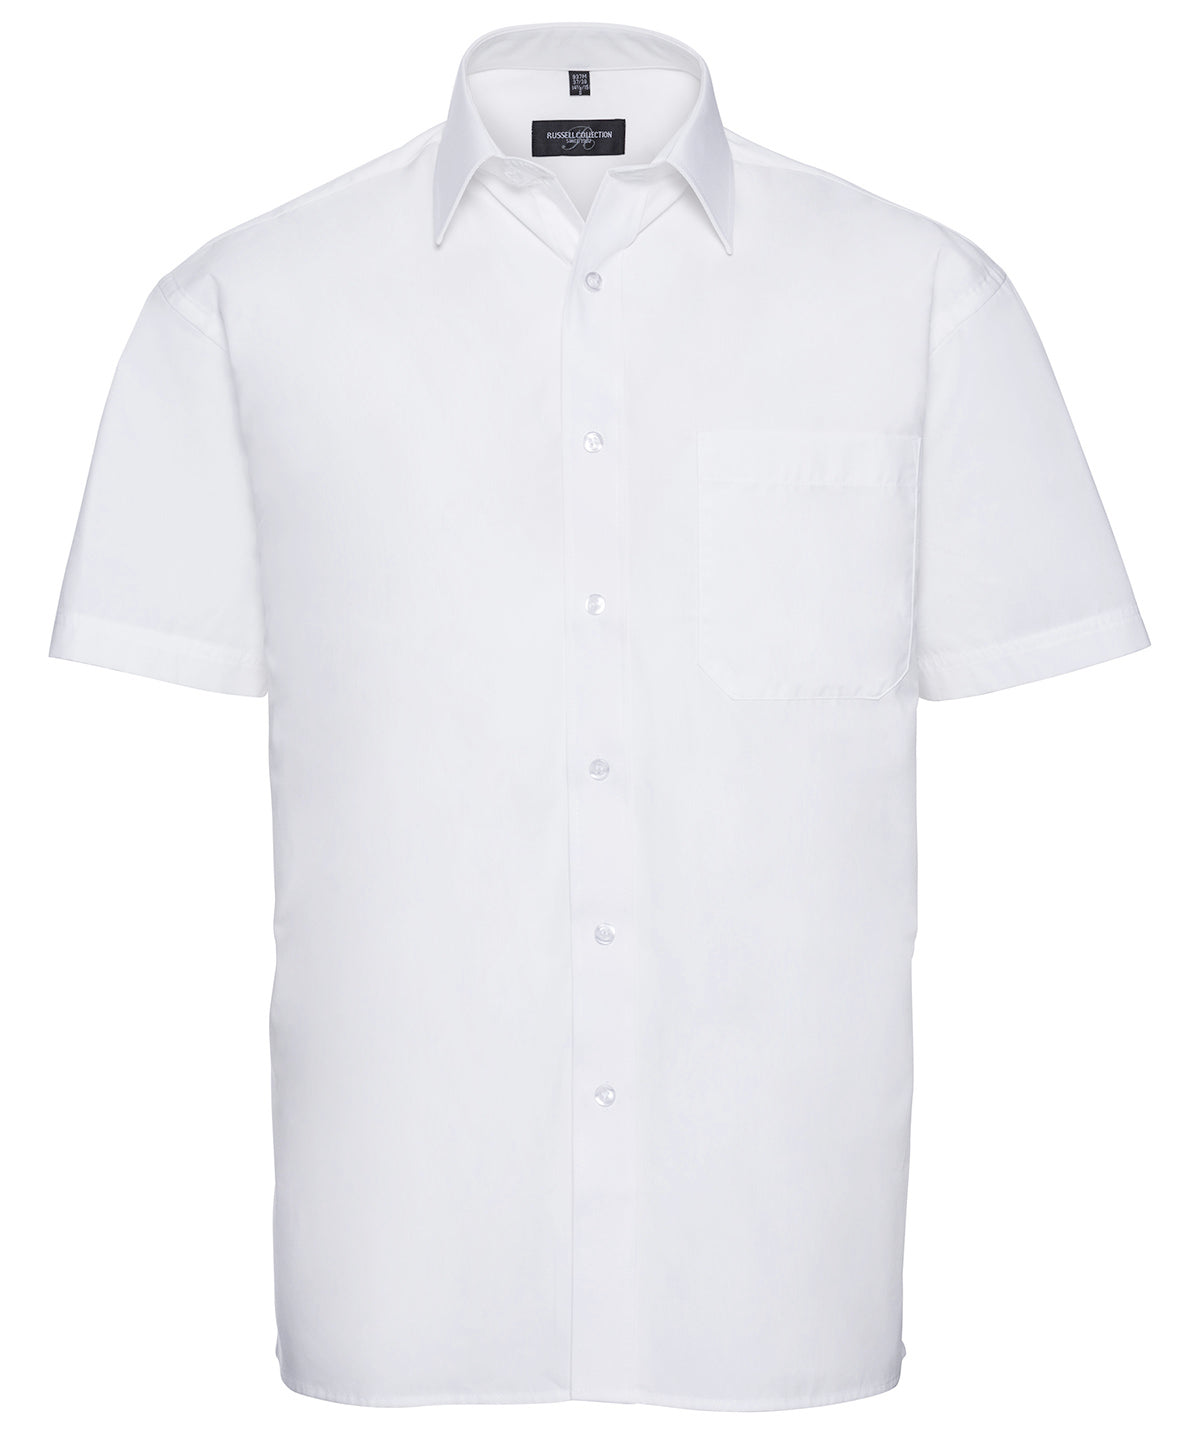 Bolir - Short Sleeve Pure Cotton Easycare Poplin Shirt